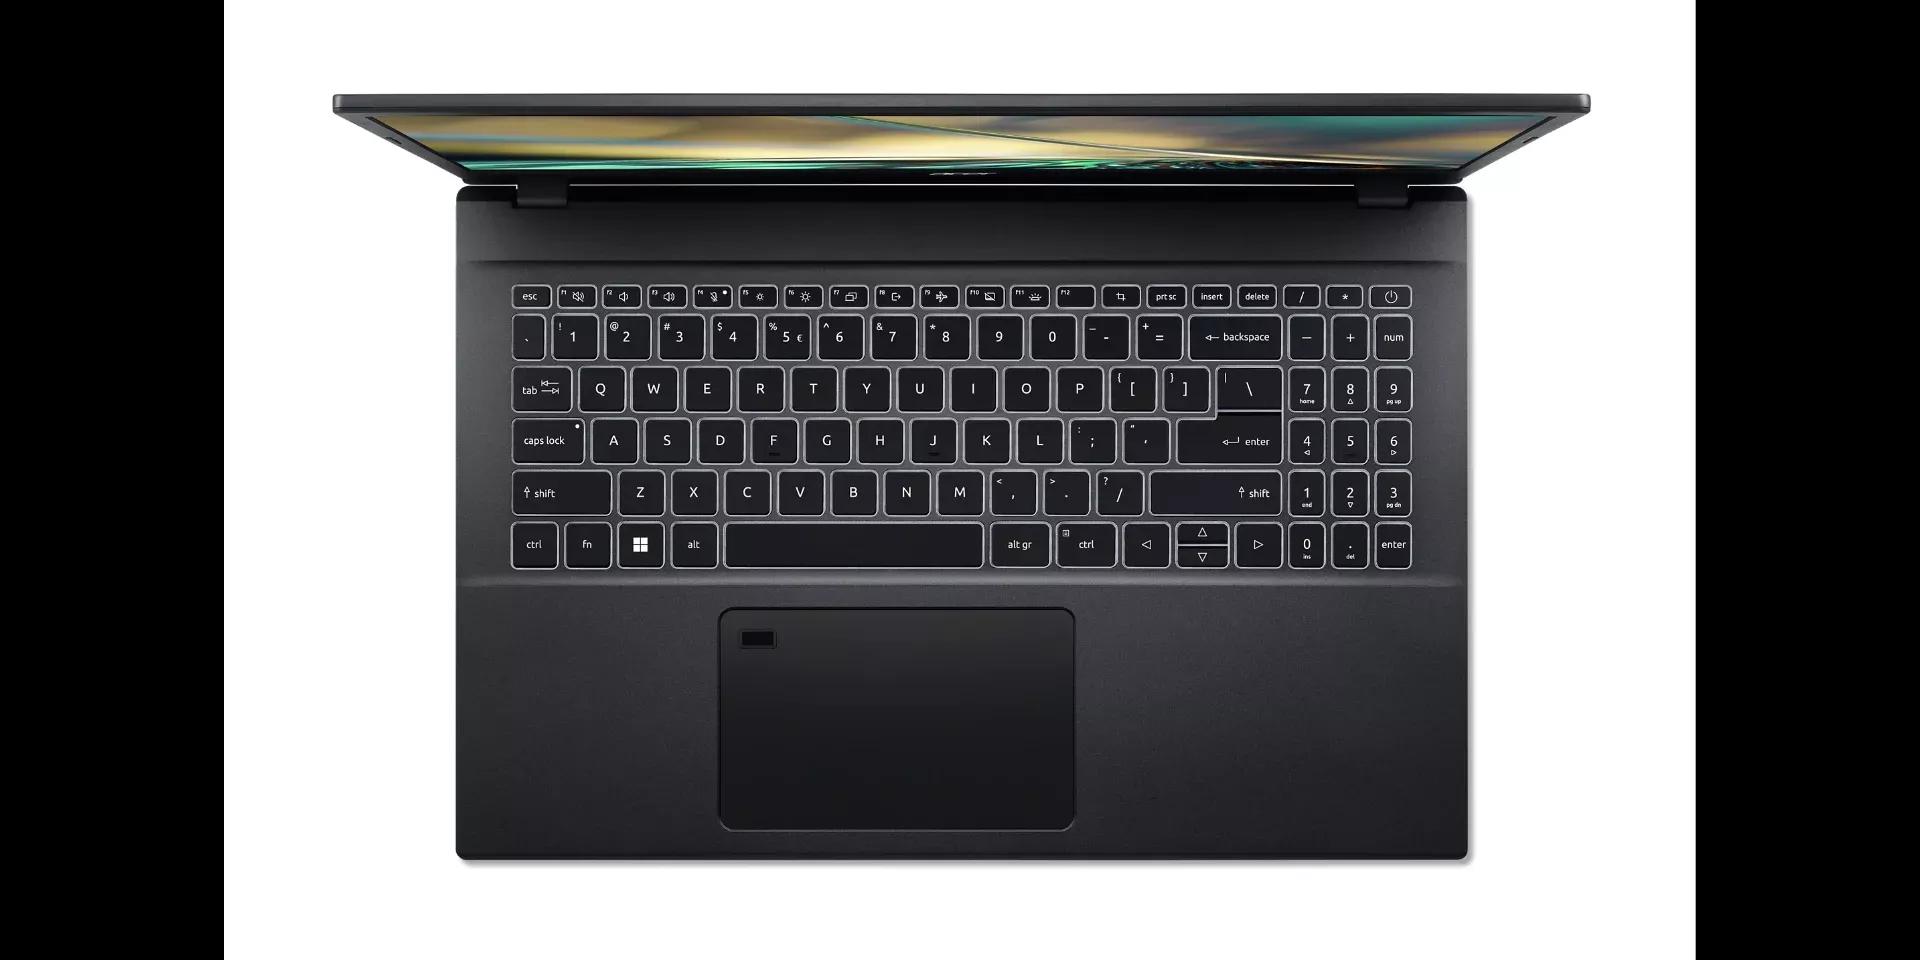 Acer Aspire 7 Price Nepal Backlit keyboard